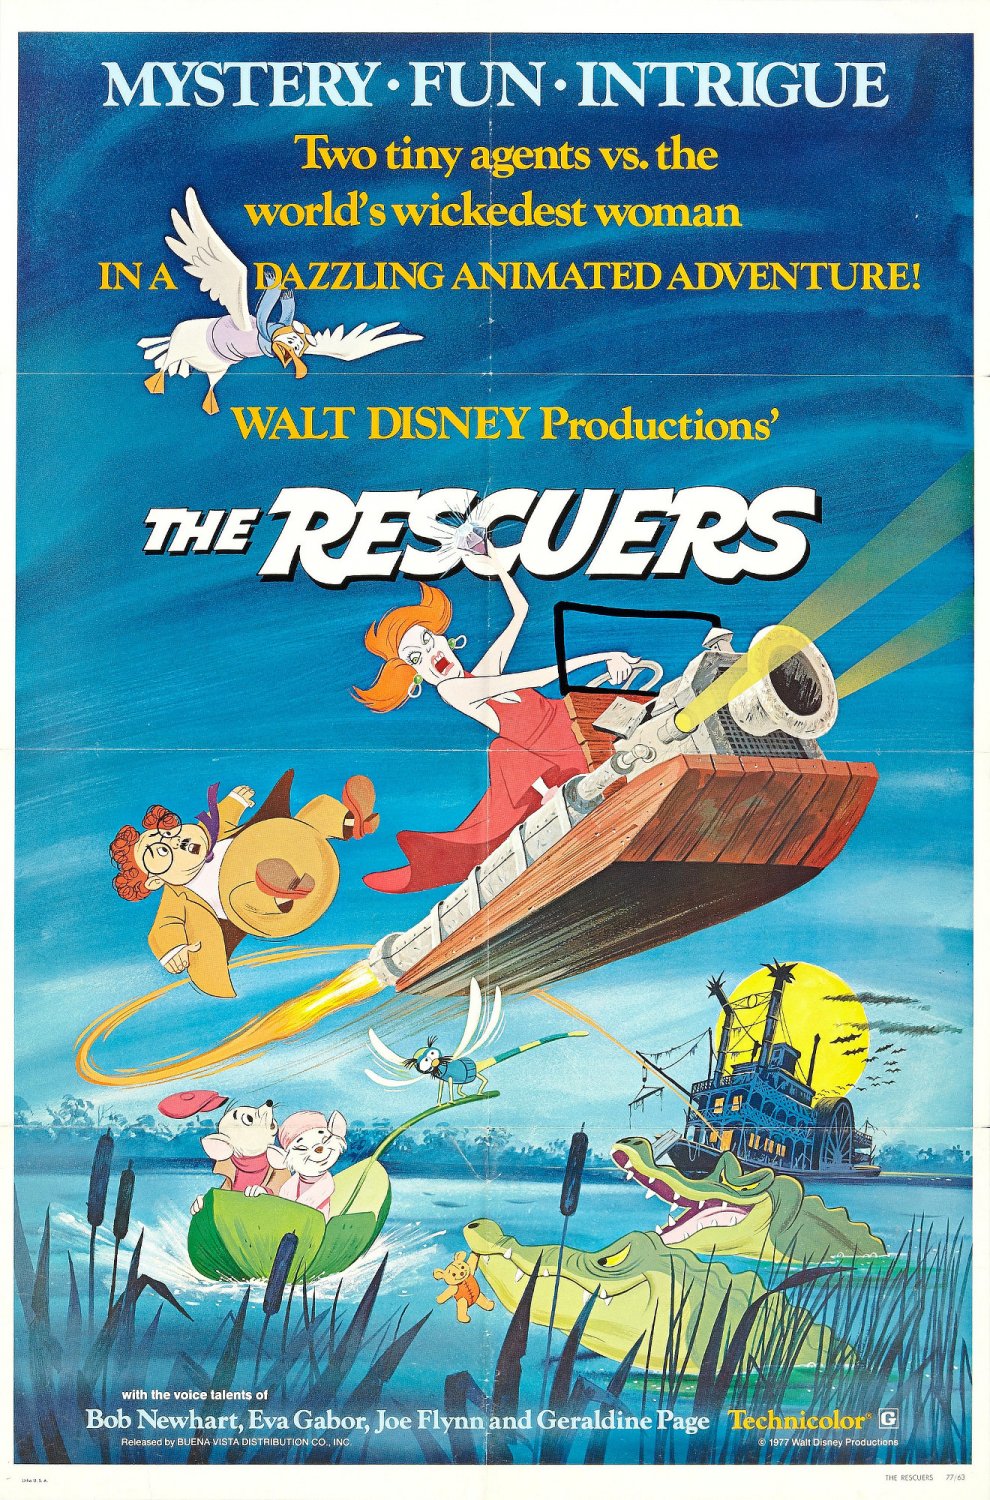 The Rescuers Film